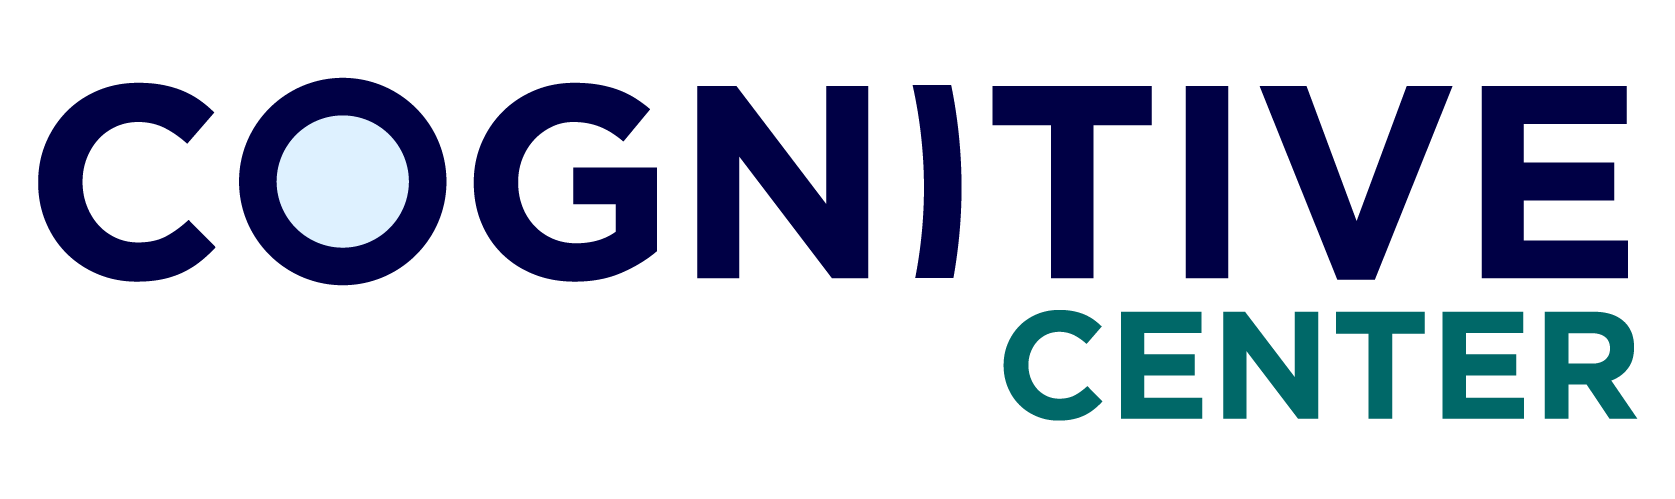 Cognitive Center Wide logo